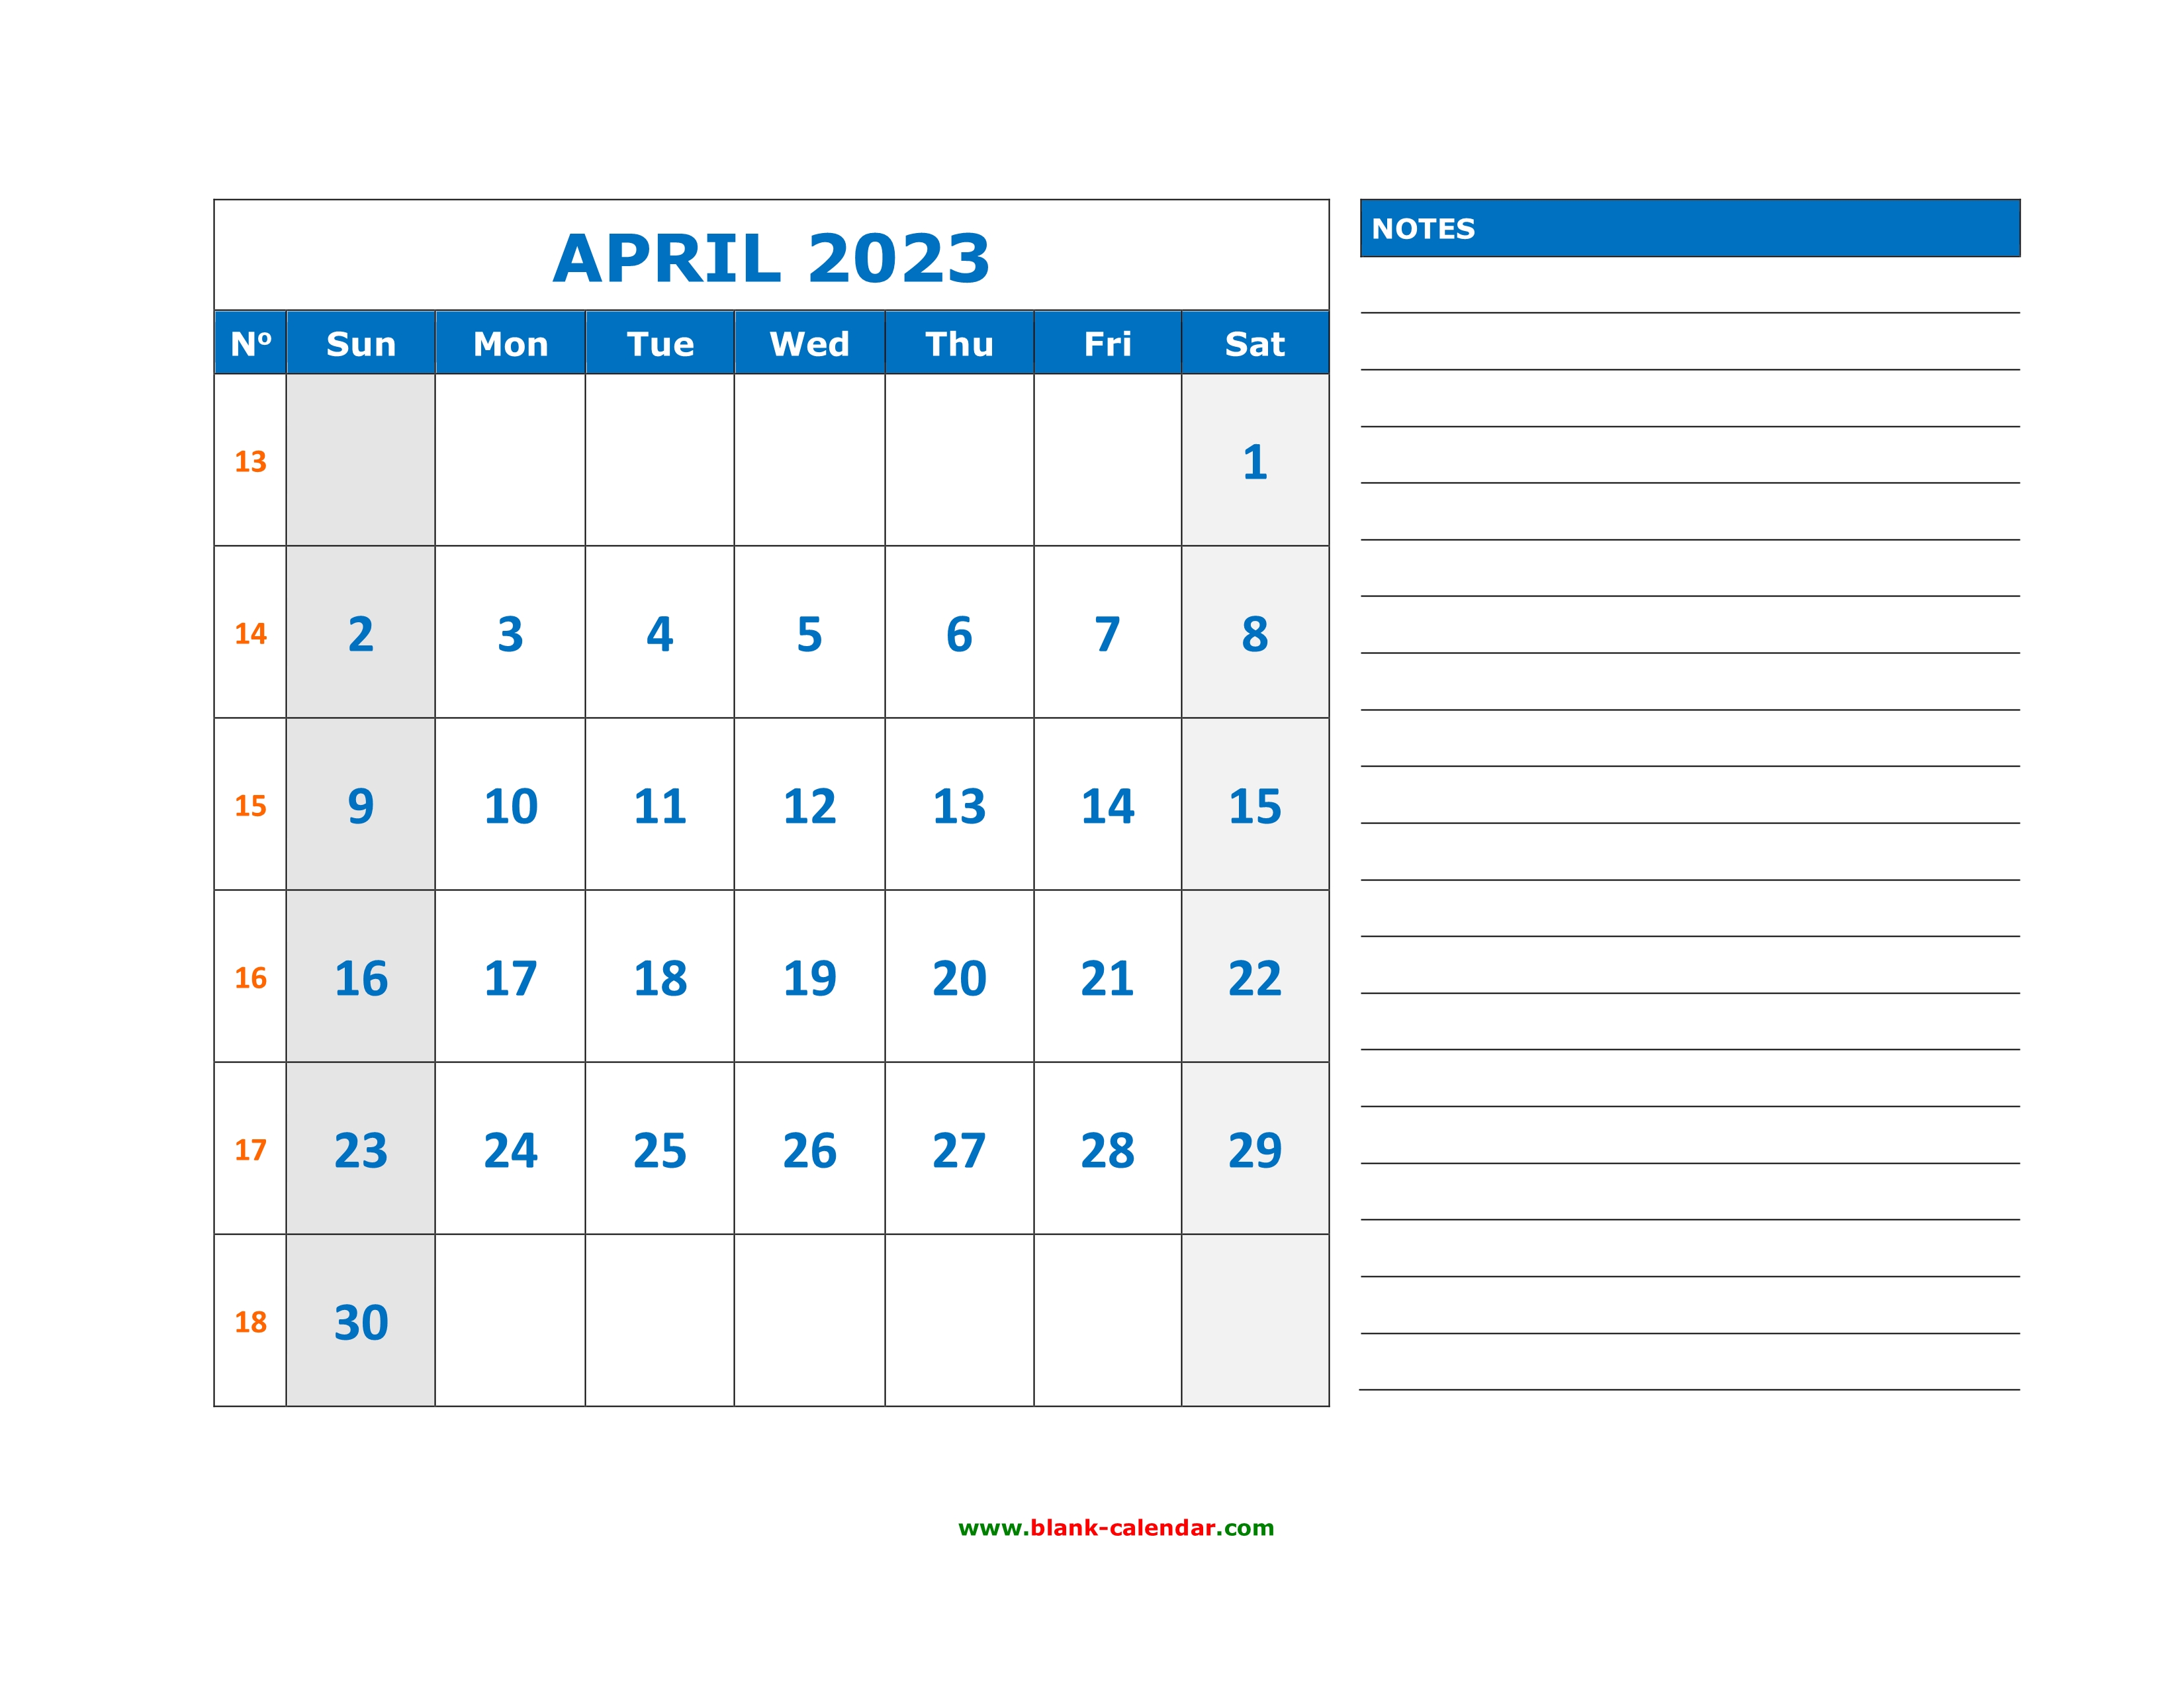 Free Download Printable April 2023 Calendar Large Space For